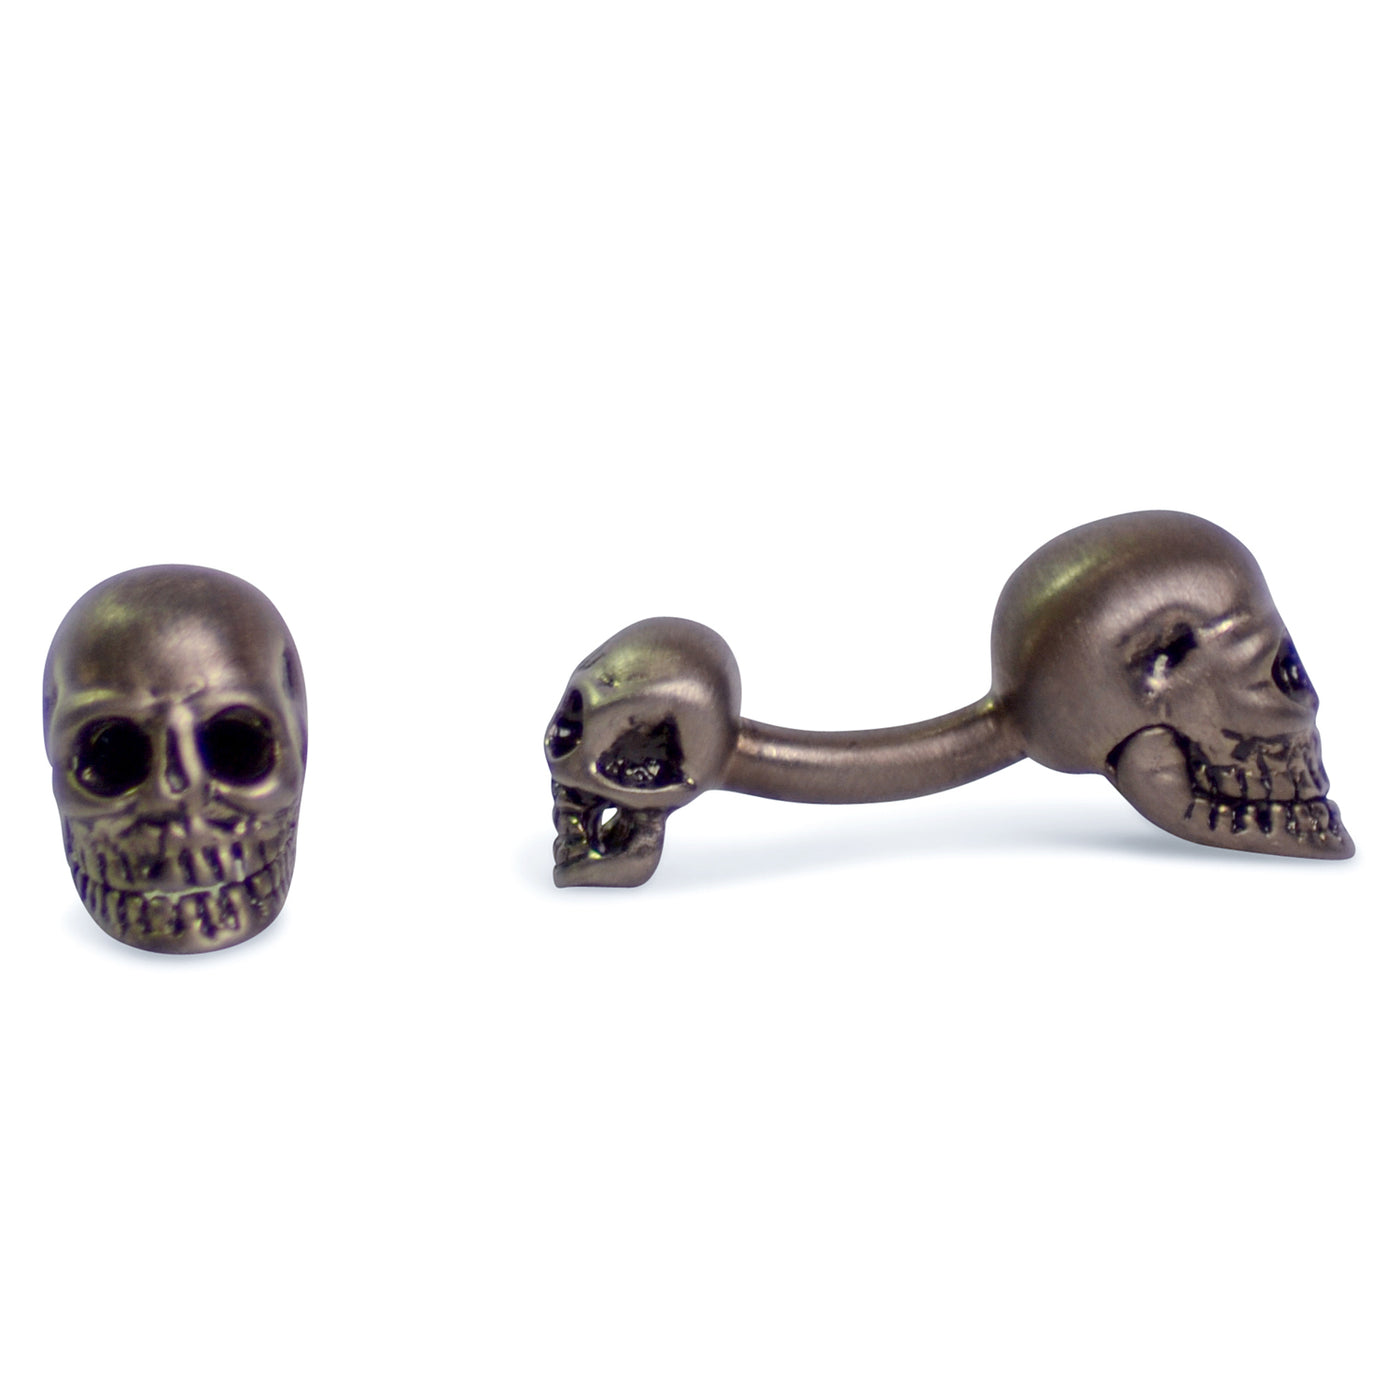 Movable Jaw Oxidized Sterling Silver Skull Cufflinks | SilverAndGold